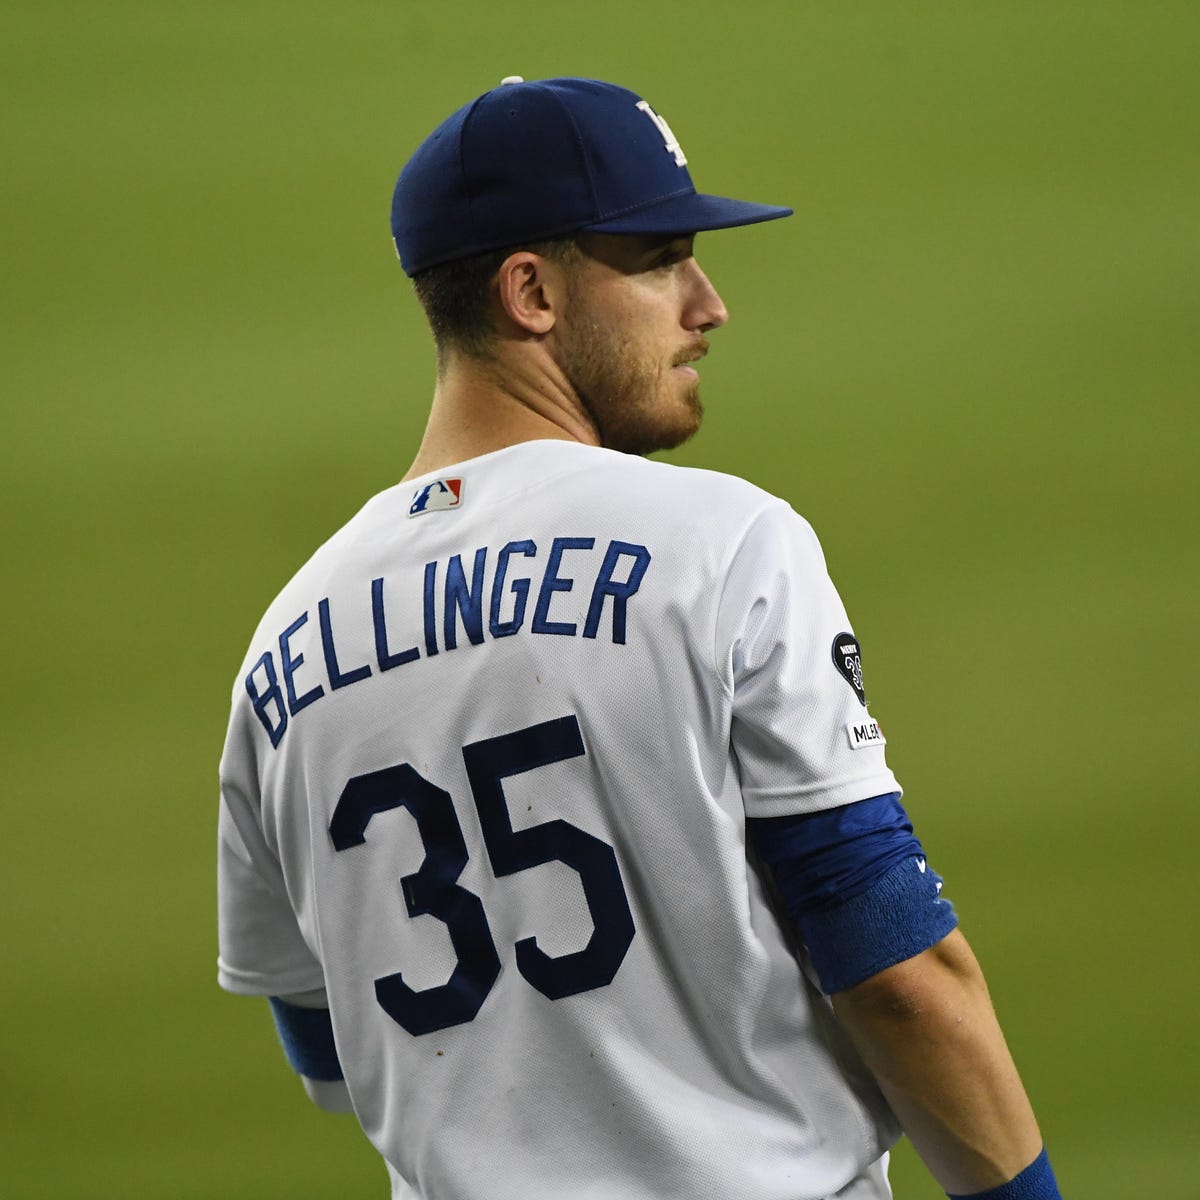 Bellinger has third most popular MLB player jersey of 2019 | by Rowan  Kavner | Dodger Insider